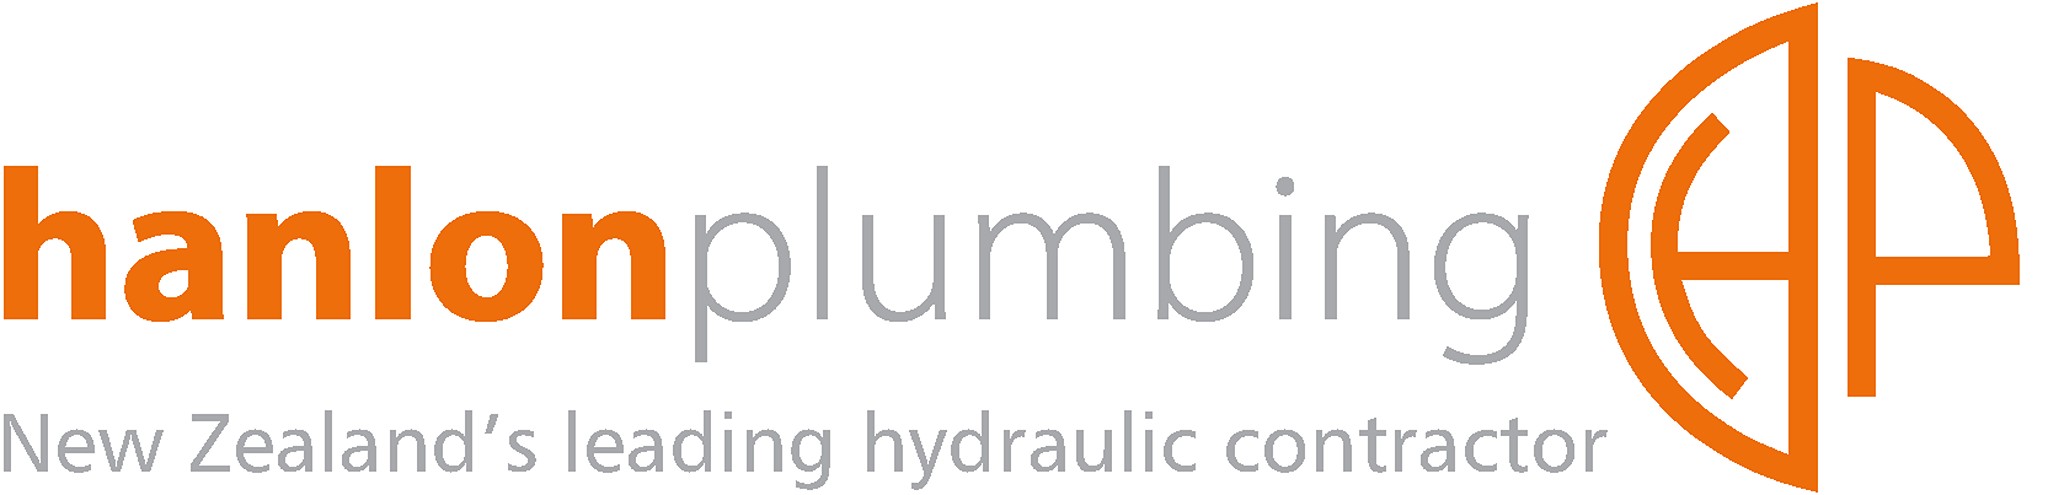 Hanlon Plumbing Limited logo